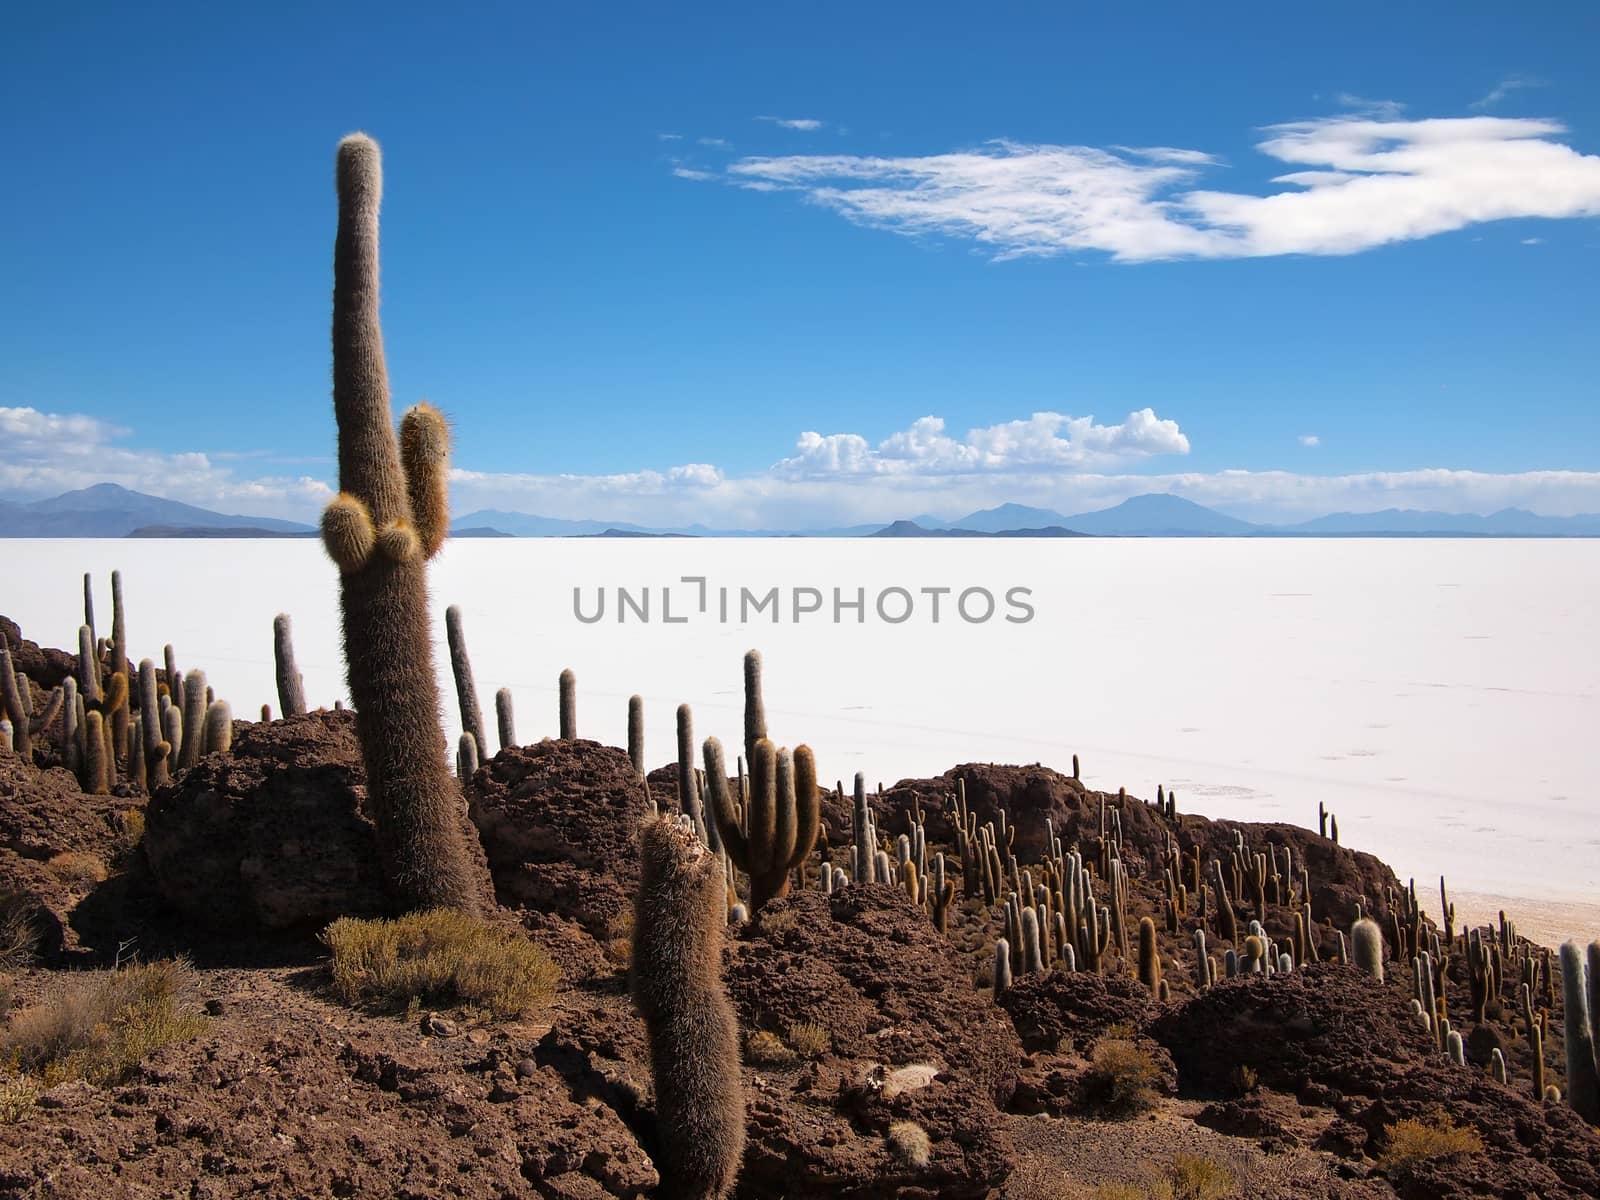 Giant cactus at the border of the Salar de Uyuni salt lake near Uyuni, Bolivia. The cactus grow on the island Isla del Pescado or Isla Incahuasi inside the Salar.